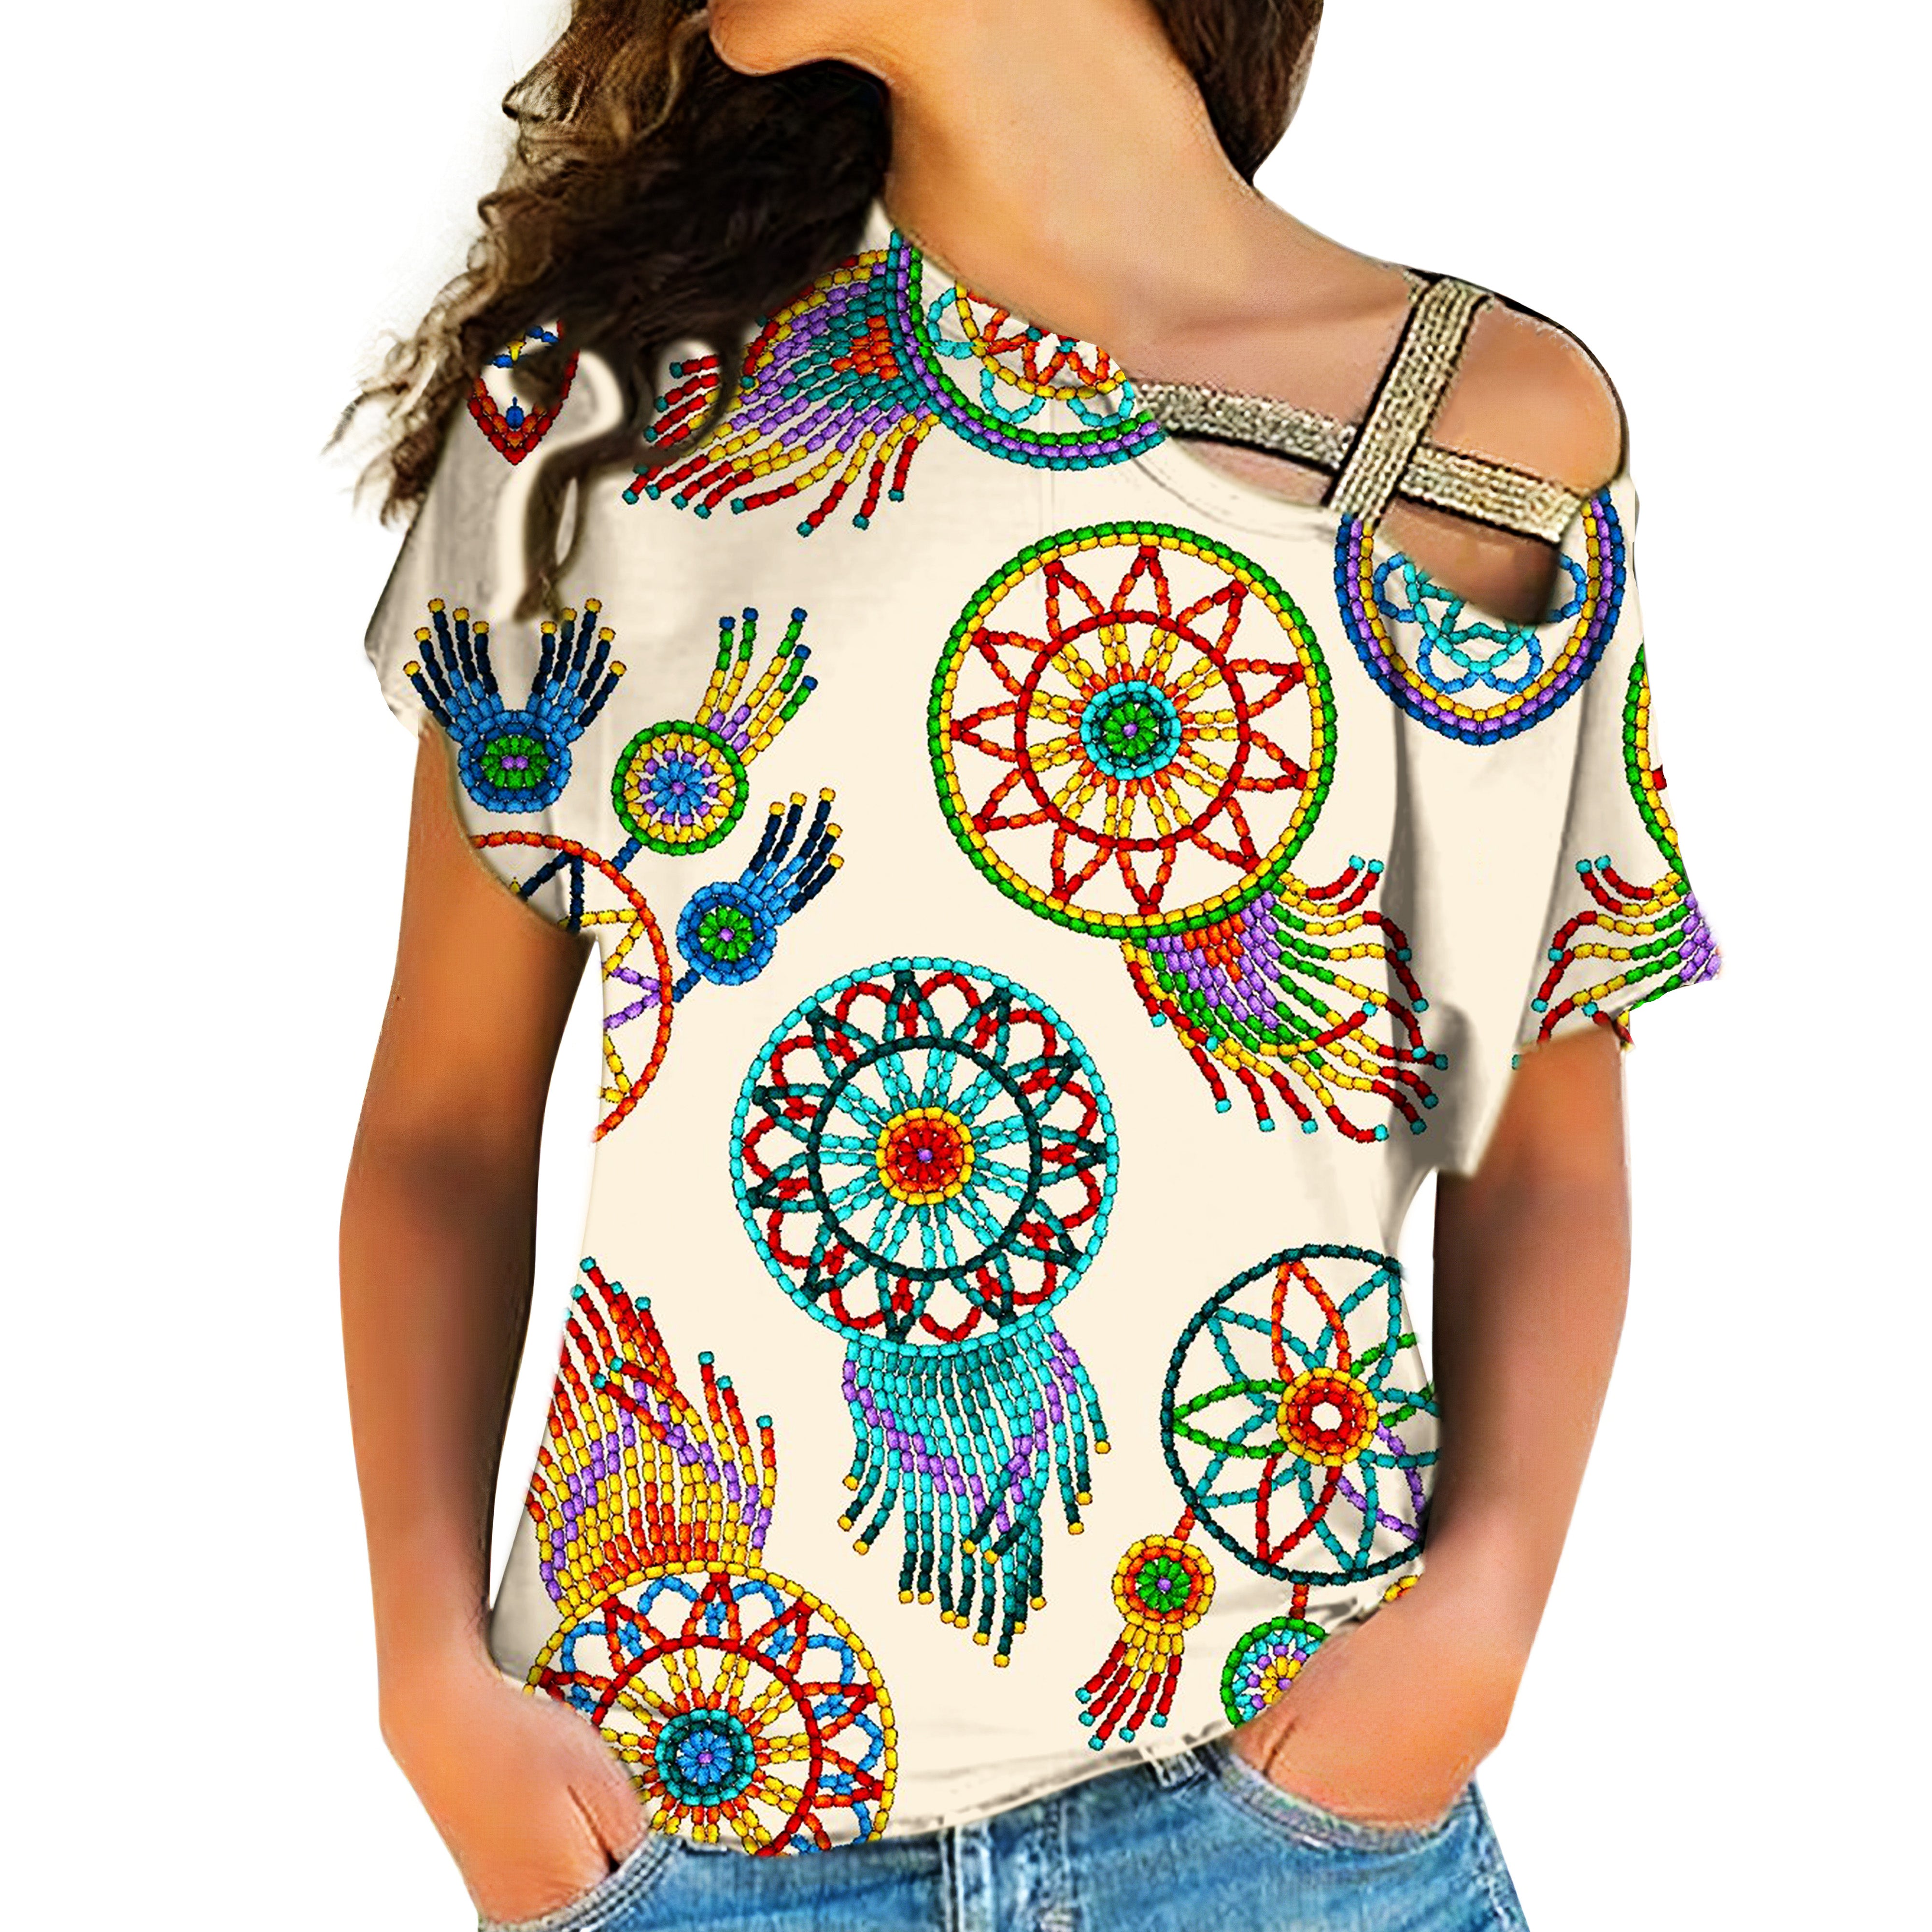 Powwow Store native american cross shoulder shirt 113